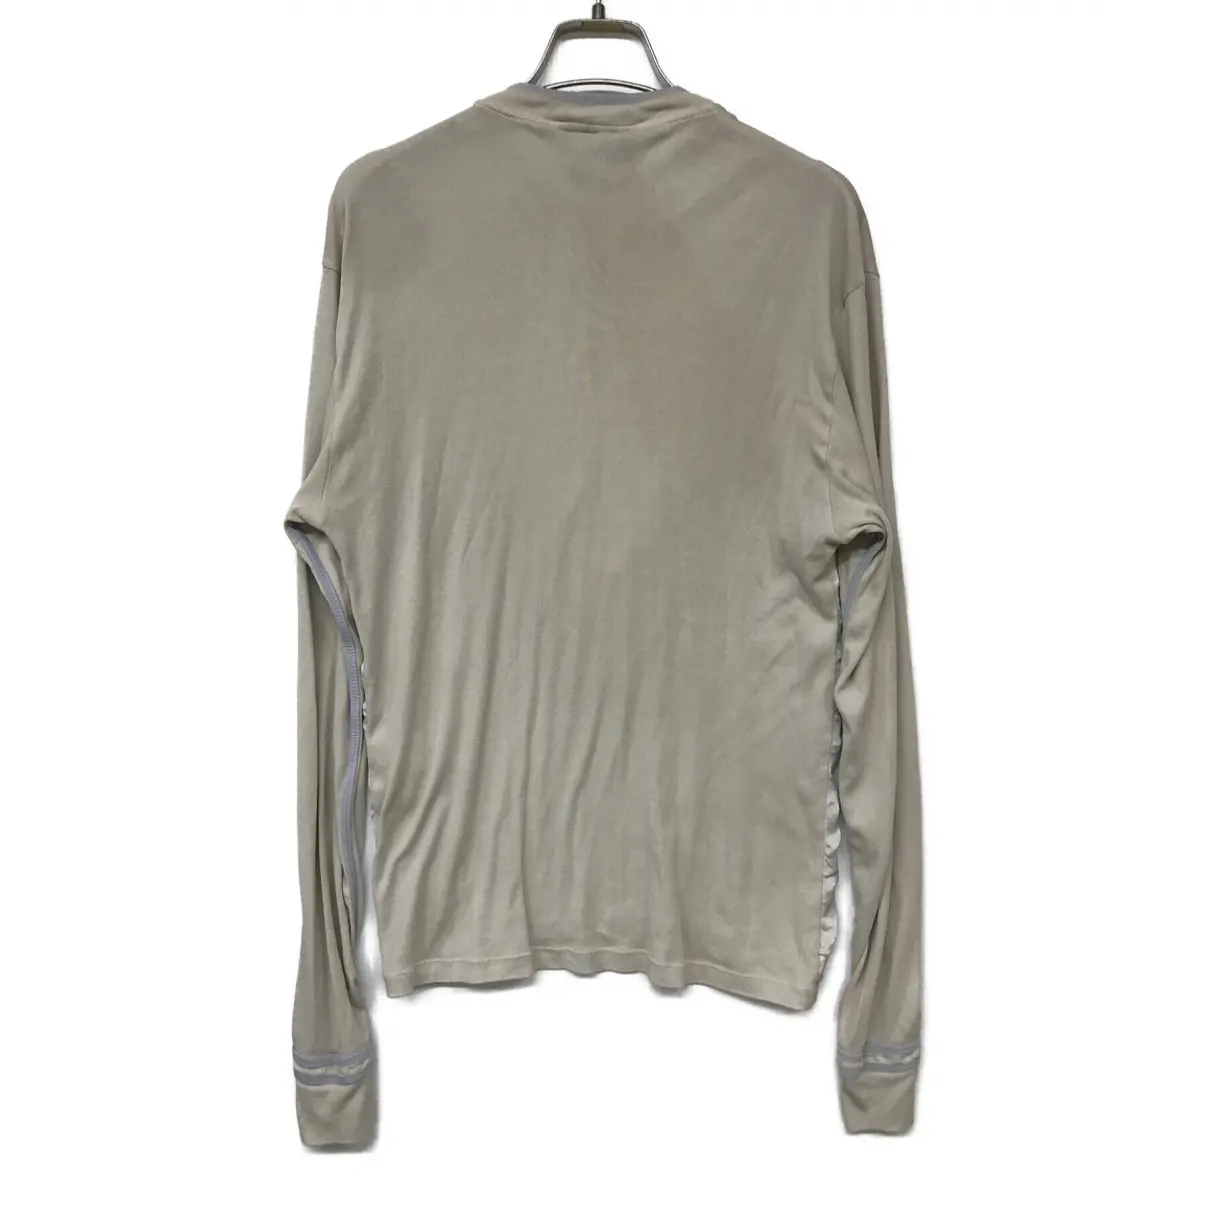 Buy Yves Saint Laurent Knitwear & sweatshirt online